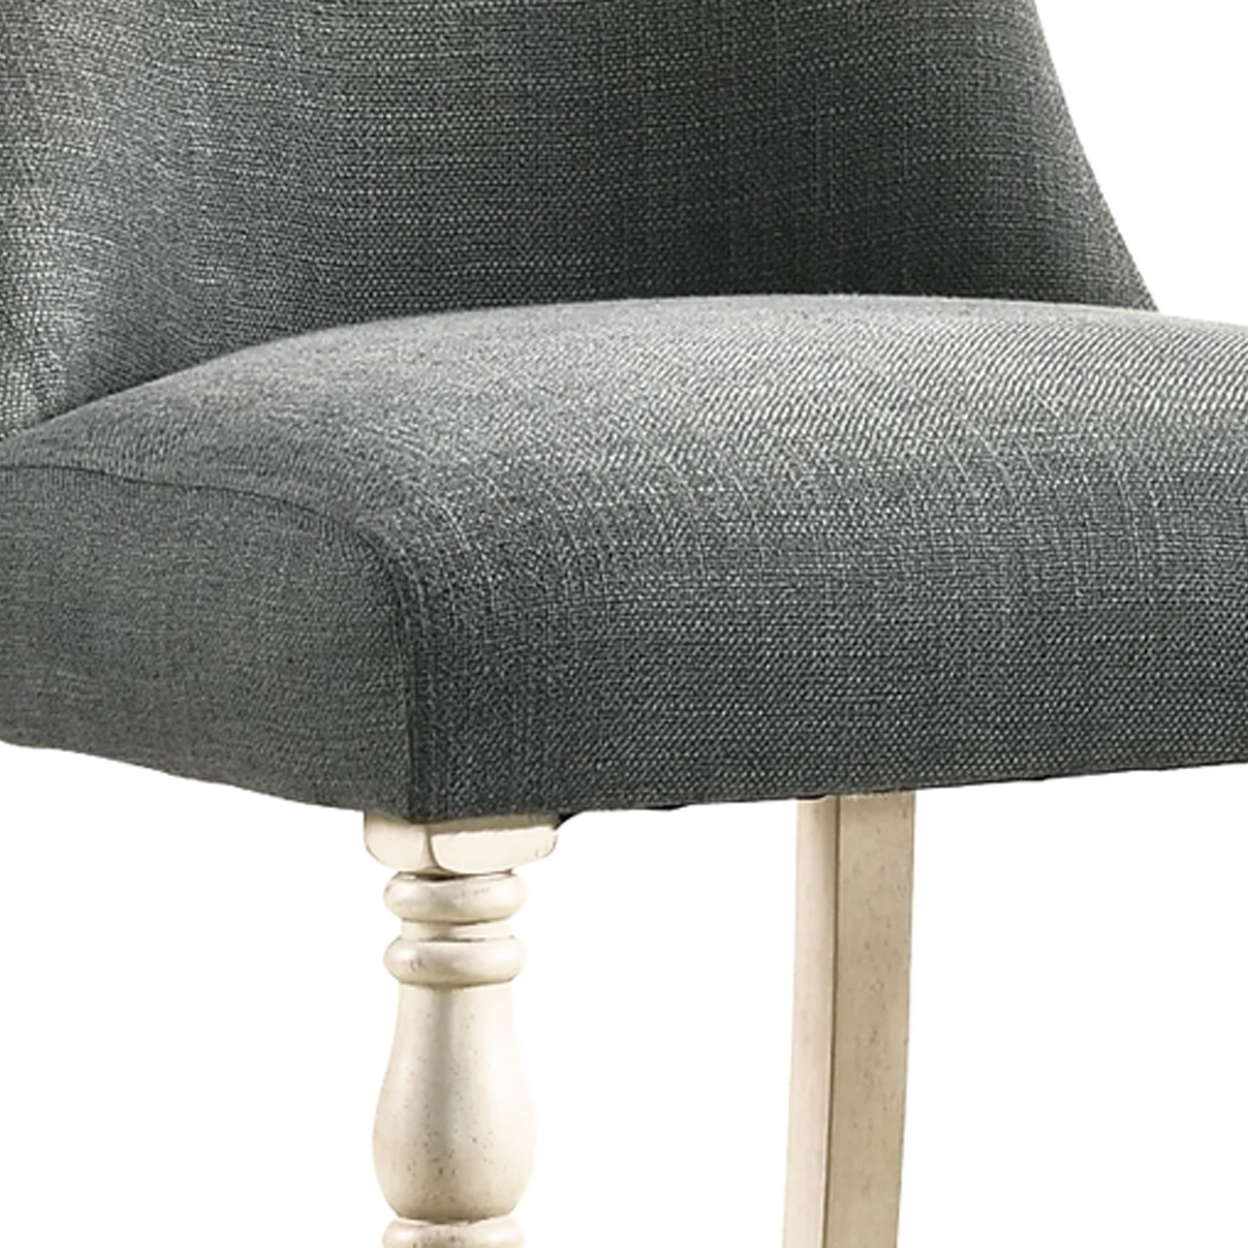 Swan 26 Inch Counter Height Chair, Set Of 2, Gray Seat, Ivory Turned Legs- Saltoro Sherpi